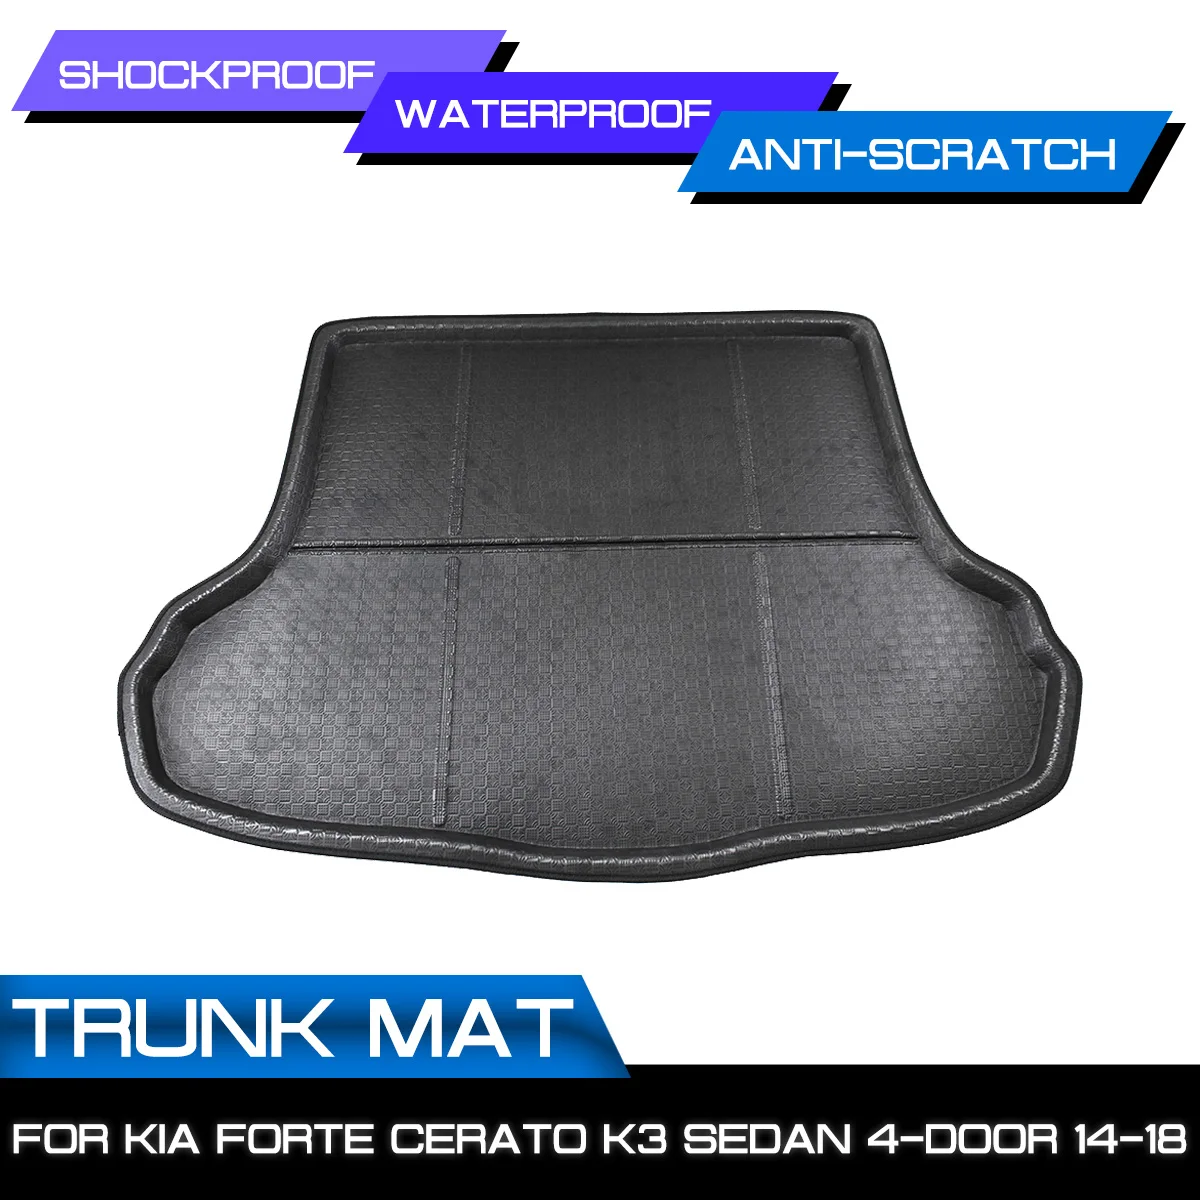 

Автомобильный коврик ковер для Kia Форте Cerato K3 седан 4-двери 2014-2018 задний багажник анти-грязь